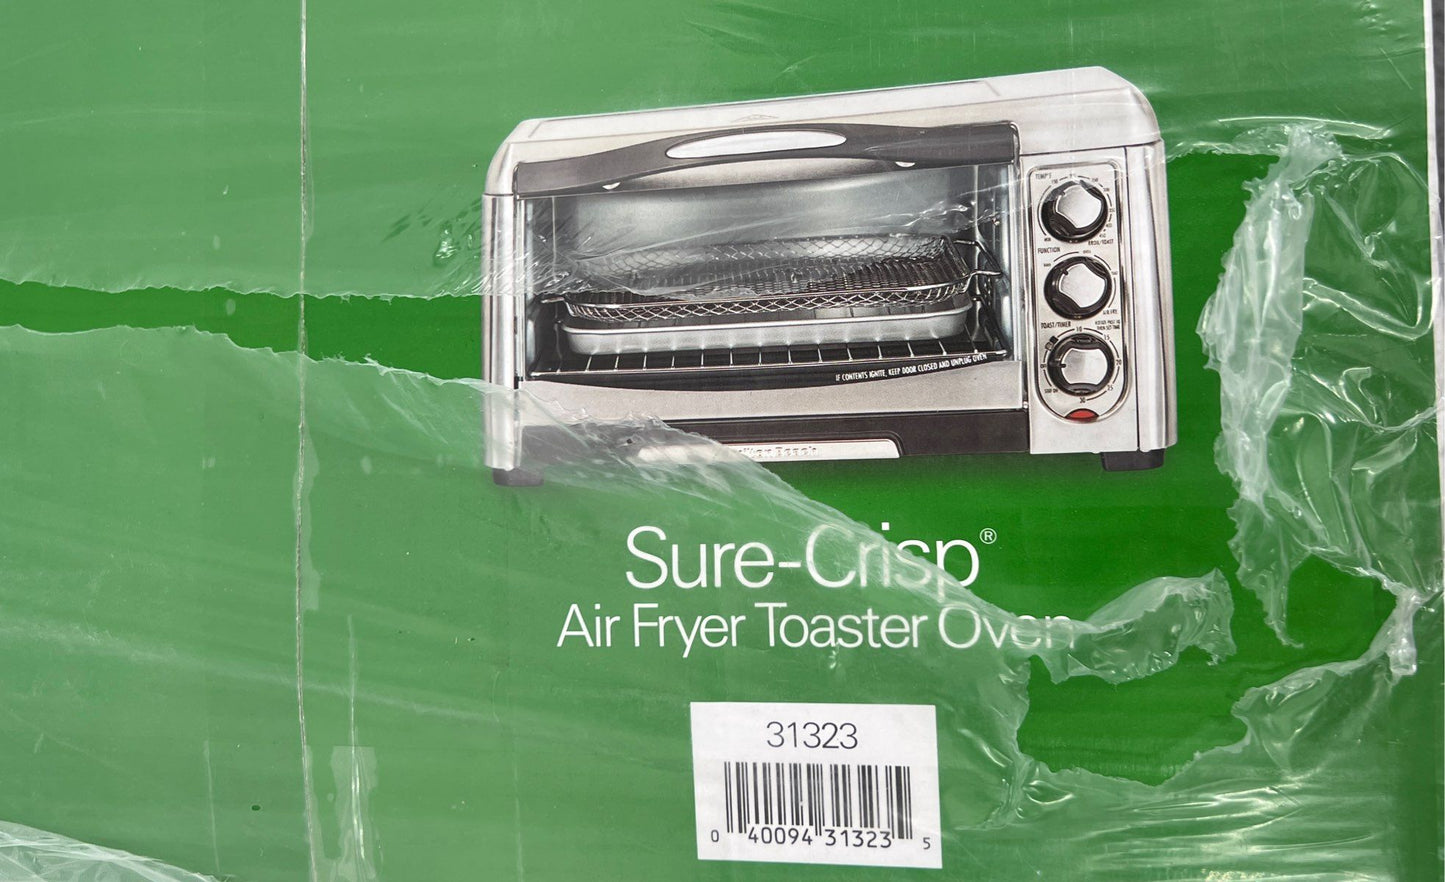 New Hamilton Beach Sure-Crisp Air Fryer-Toaster Oven-6 Slice Capacity #31323